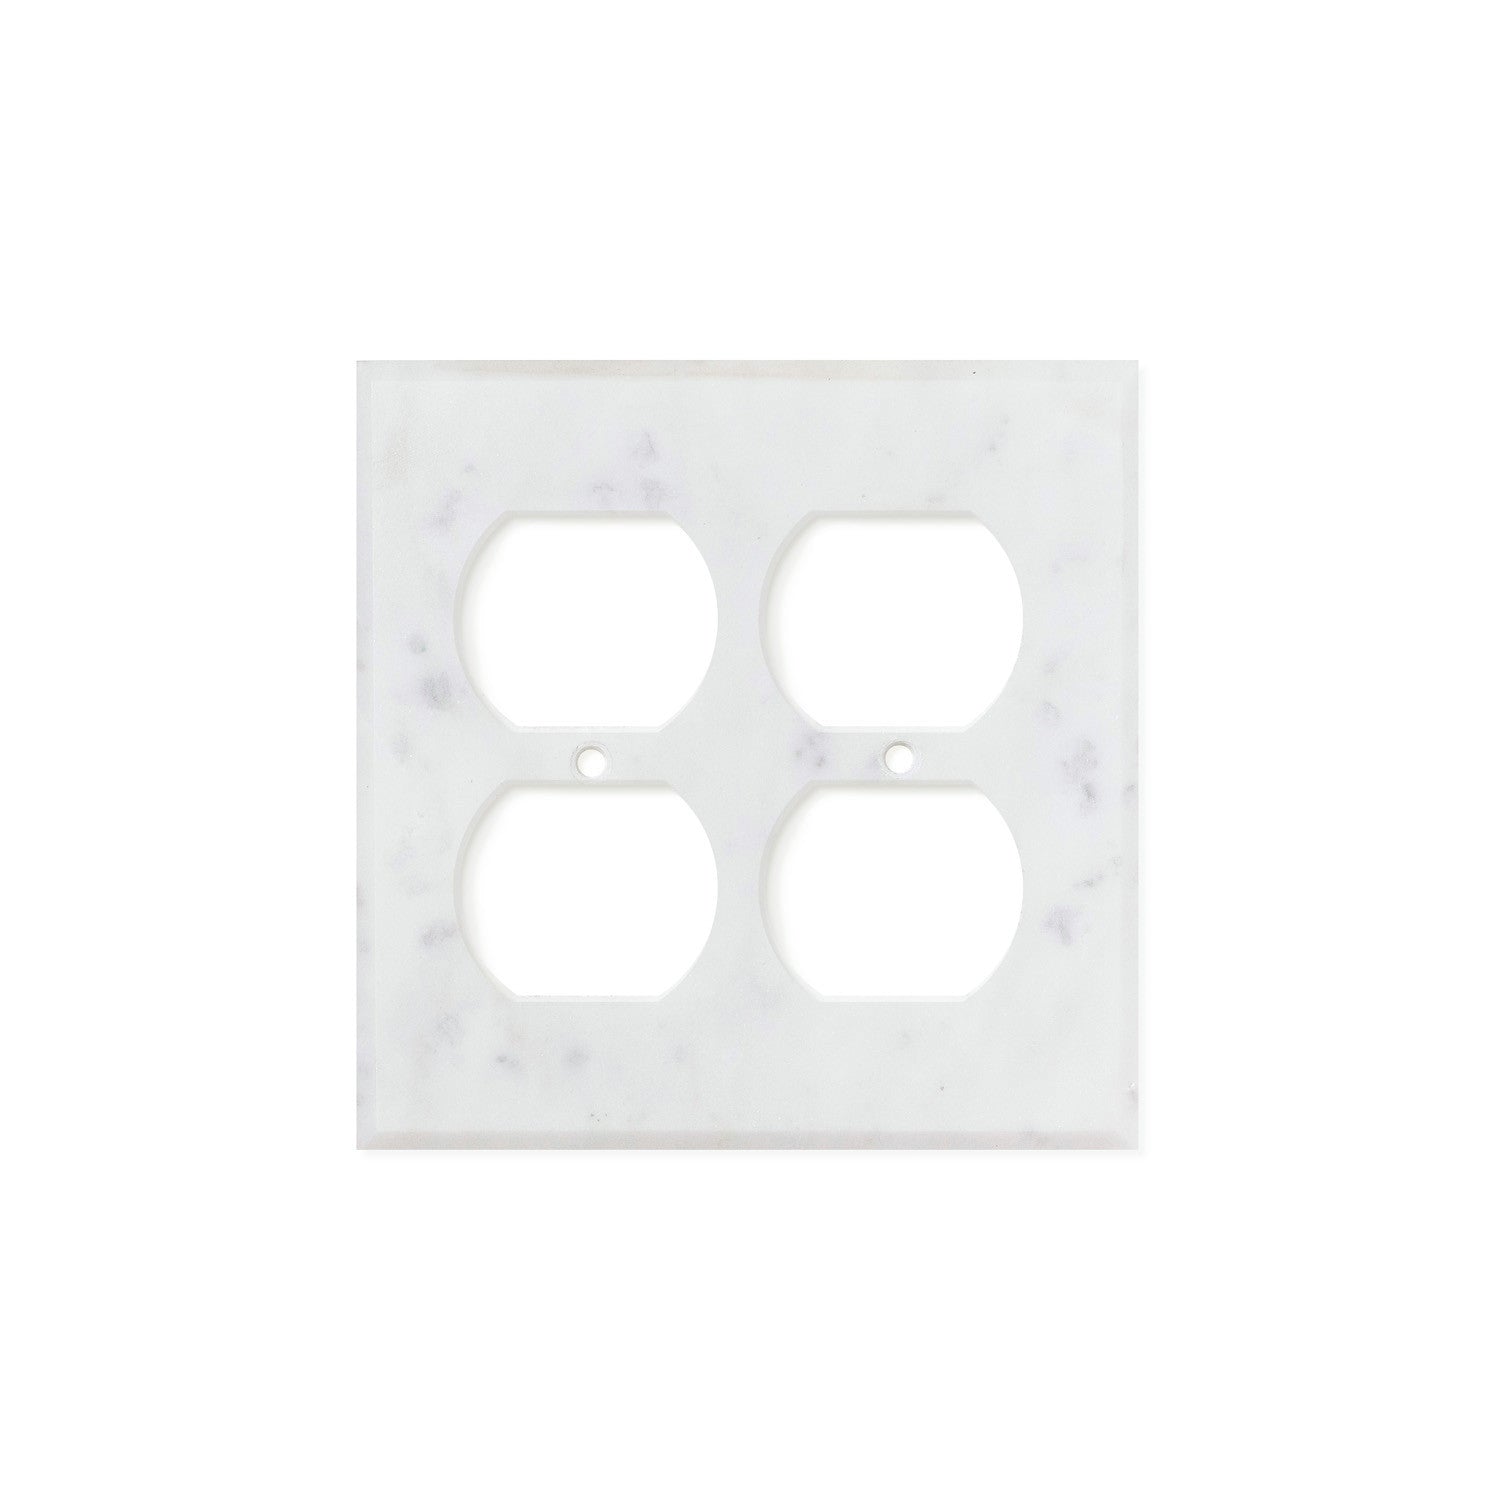 Bianco Carrara (Carrara White) Marble Switch Plate Cover, Polished (2 DUPLEX) - Tilephile